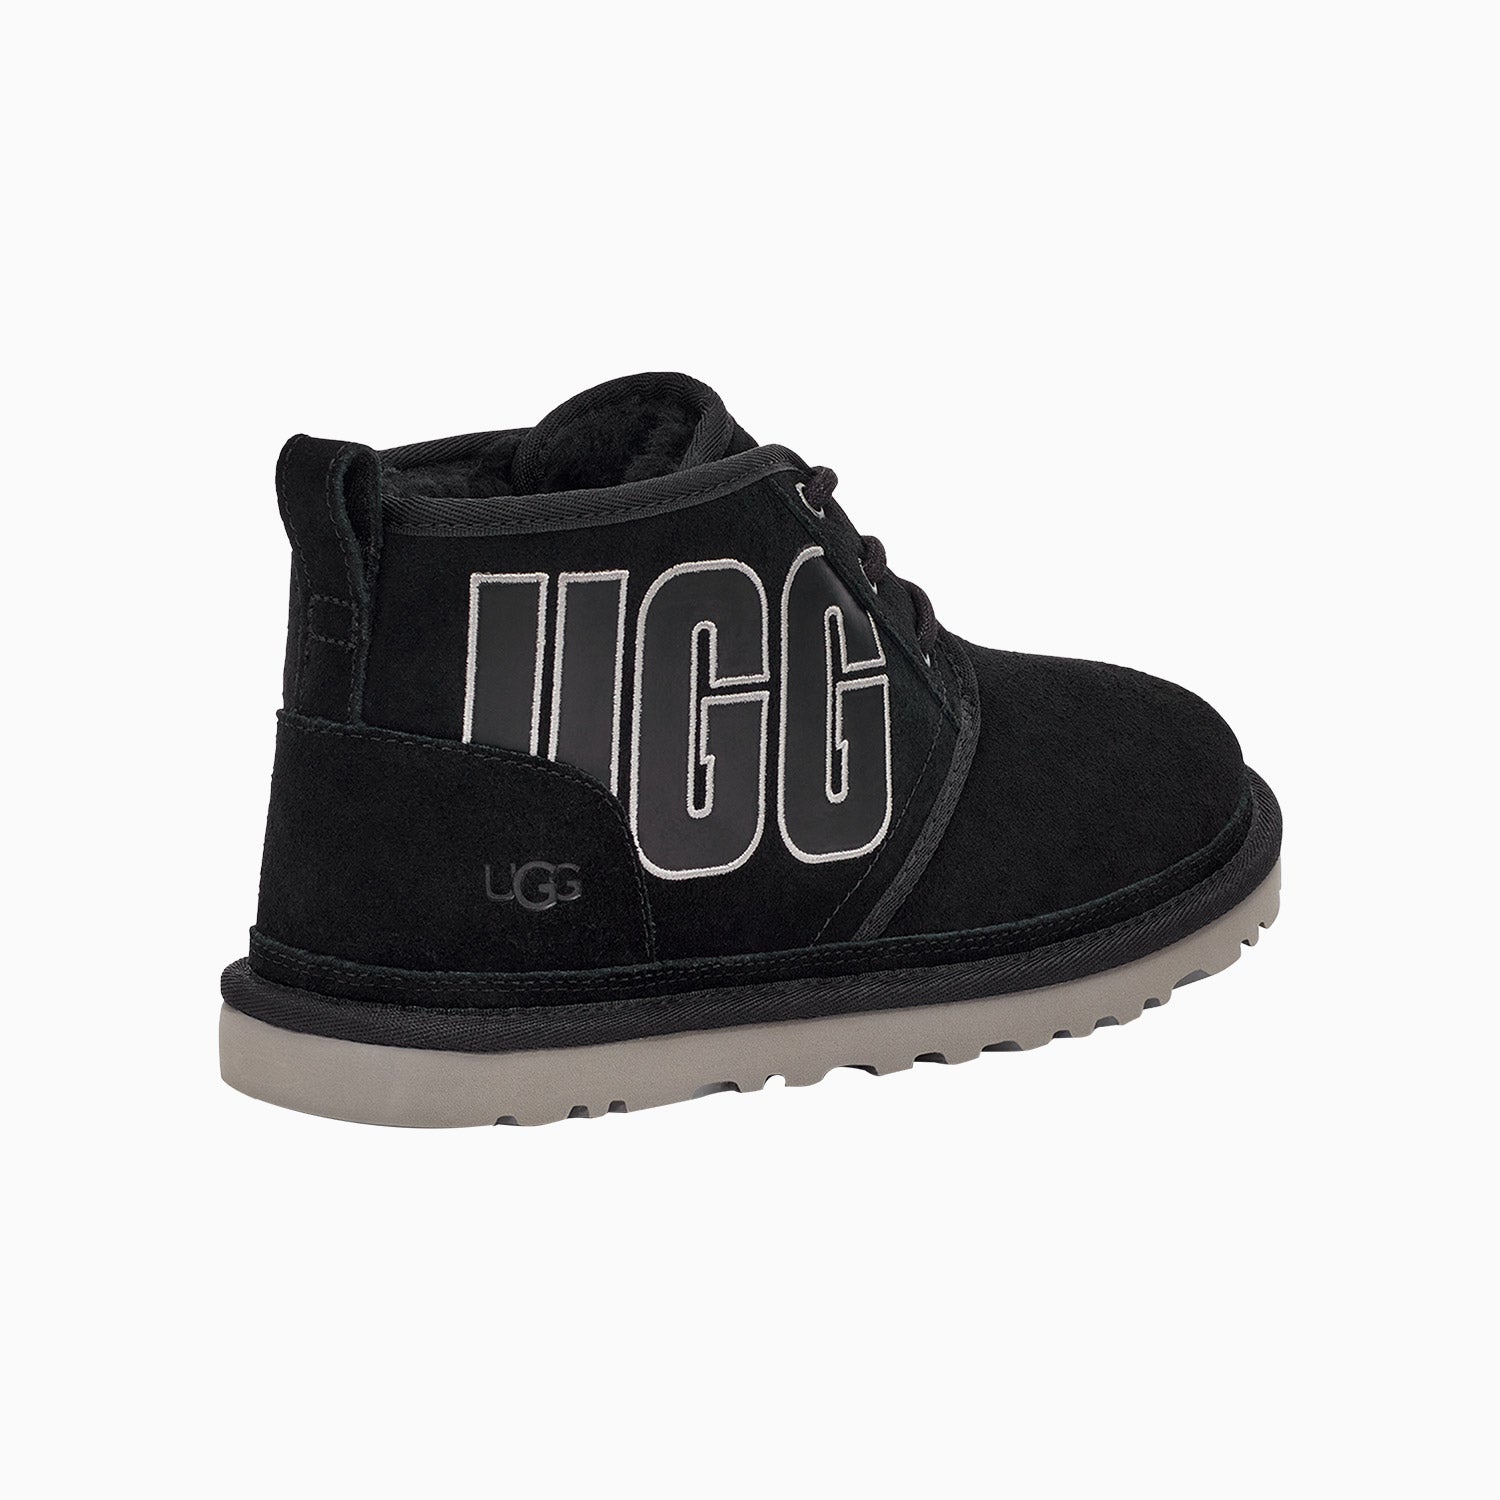 UGG Men's Neumel Graphic Outline Boot - Color: Black Grey Suede - Tops and Bottoms USA -